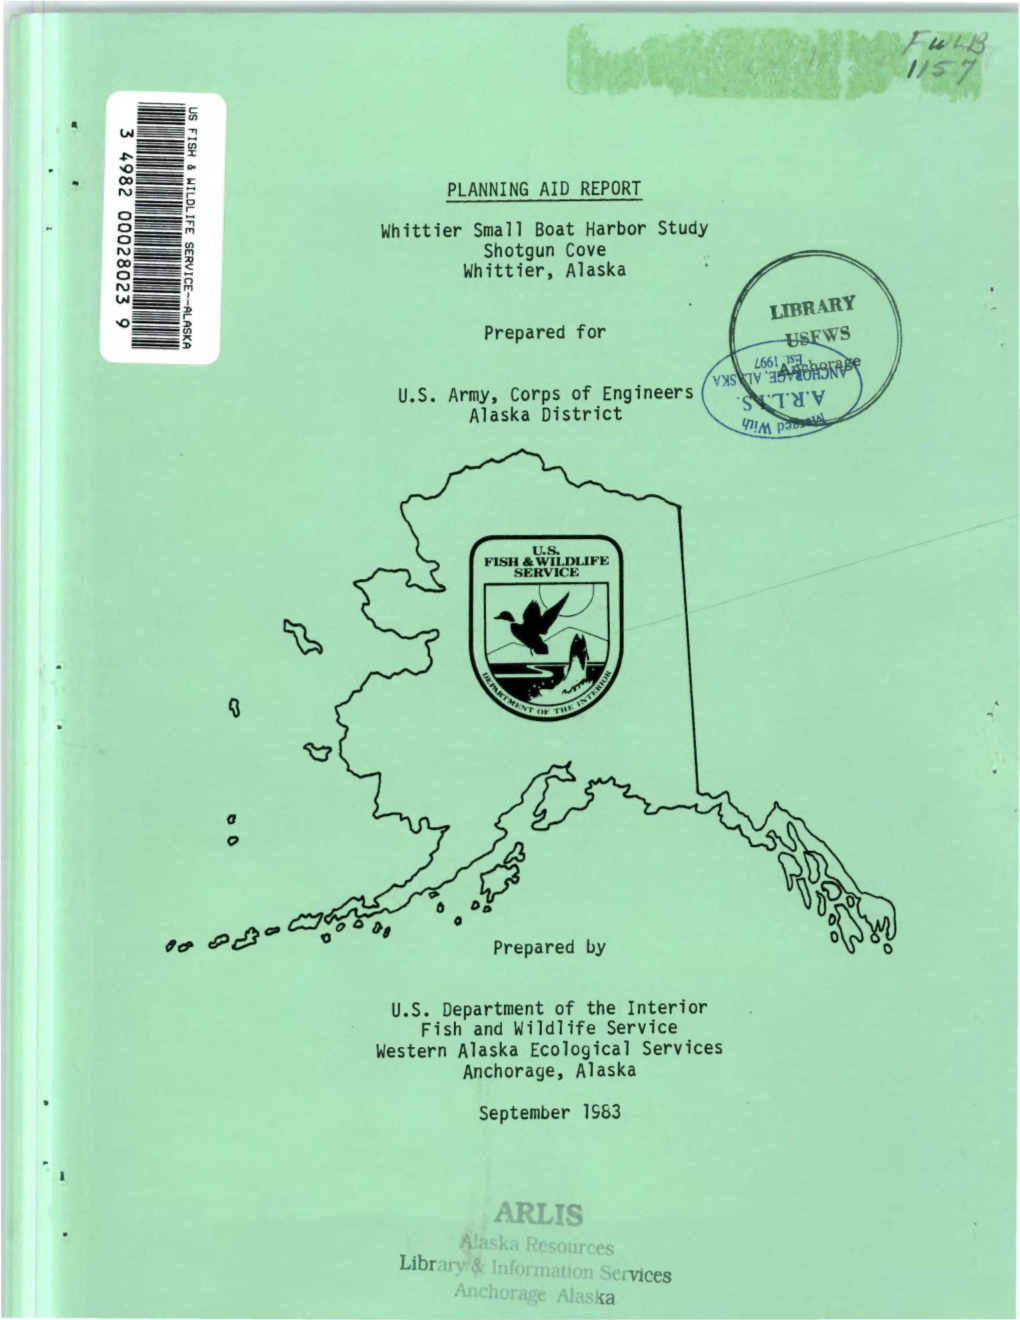 PLANNING AID REPORT Whittier Small Boat Harbor Study Shotgun Cove Whittier, Alaska